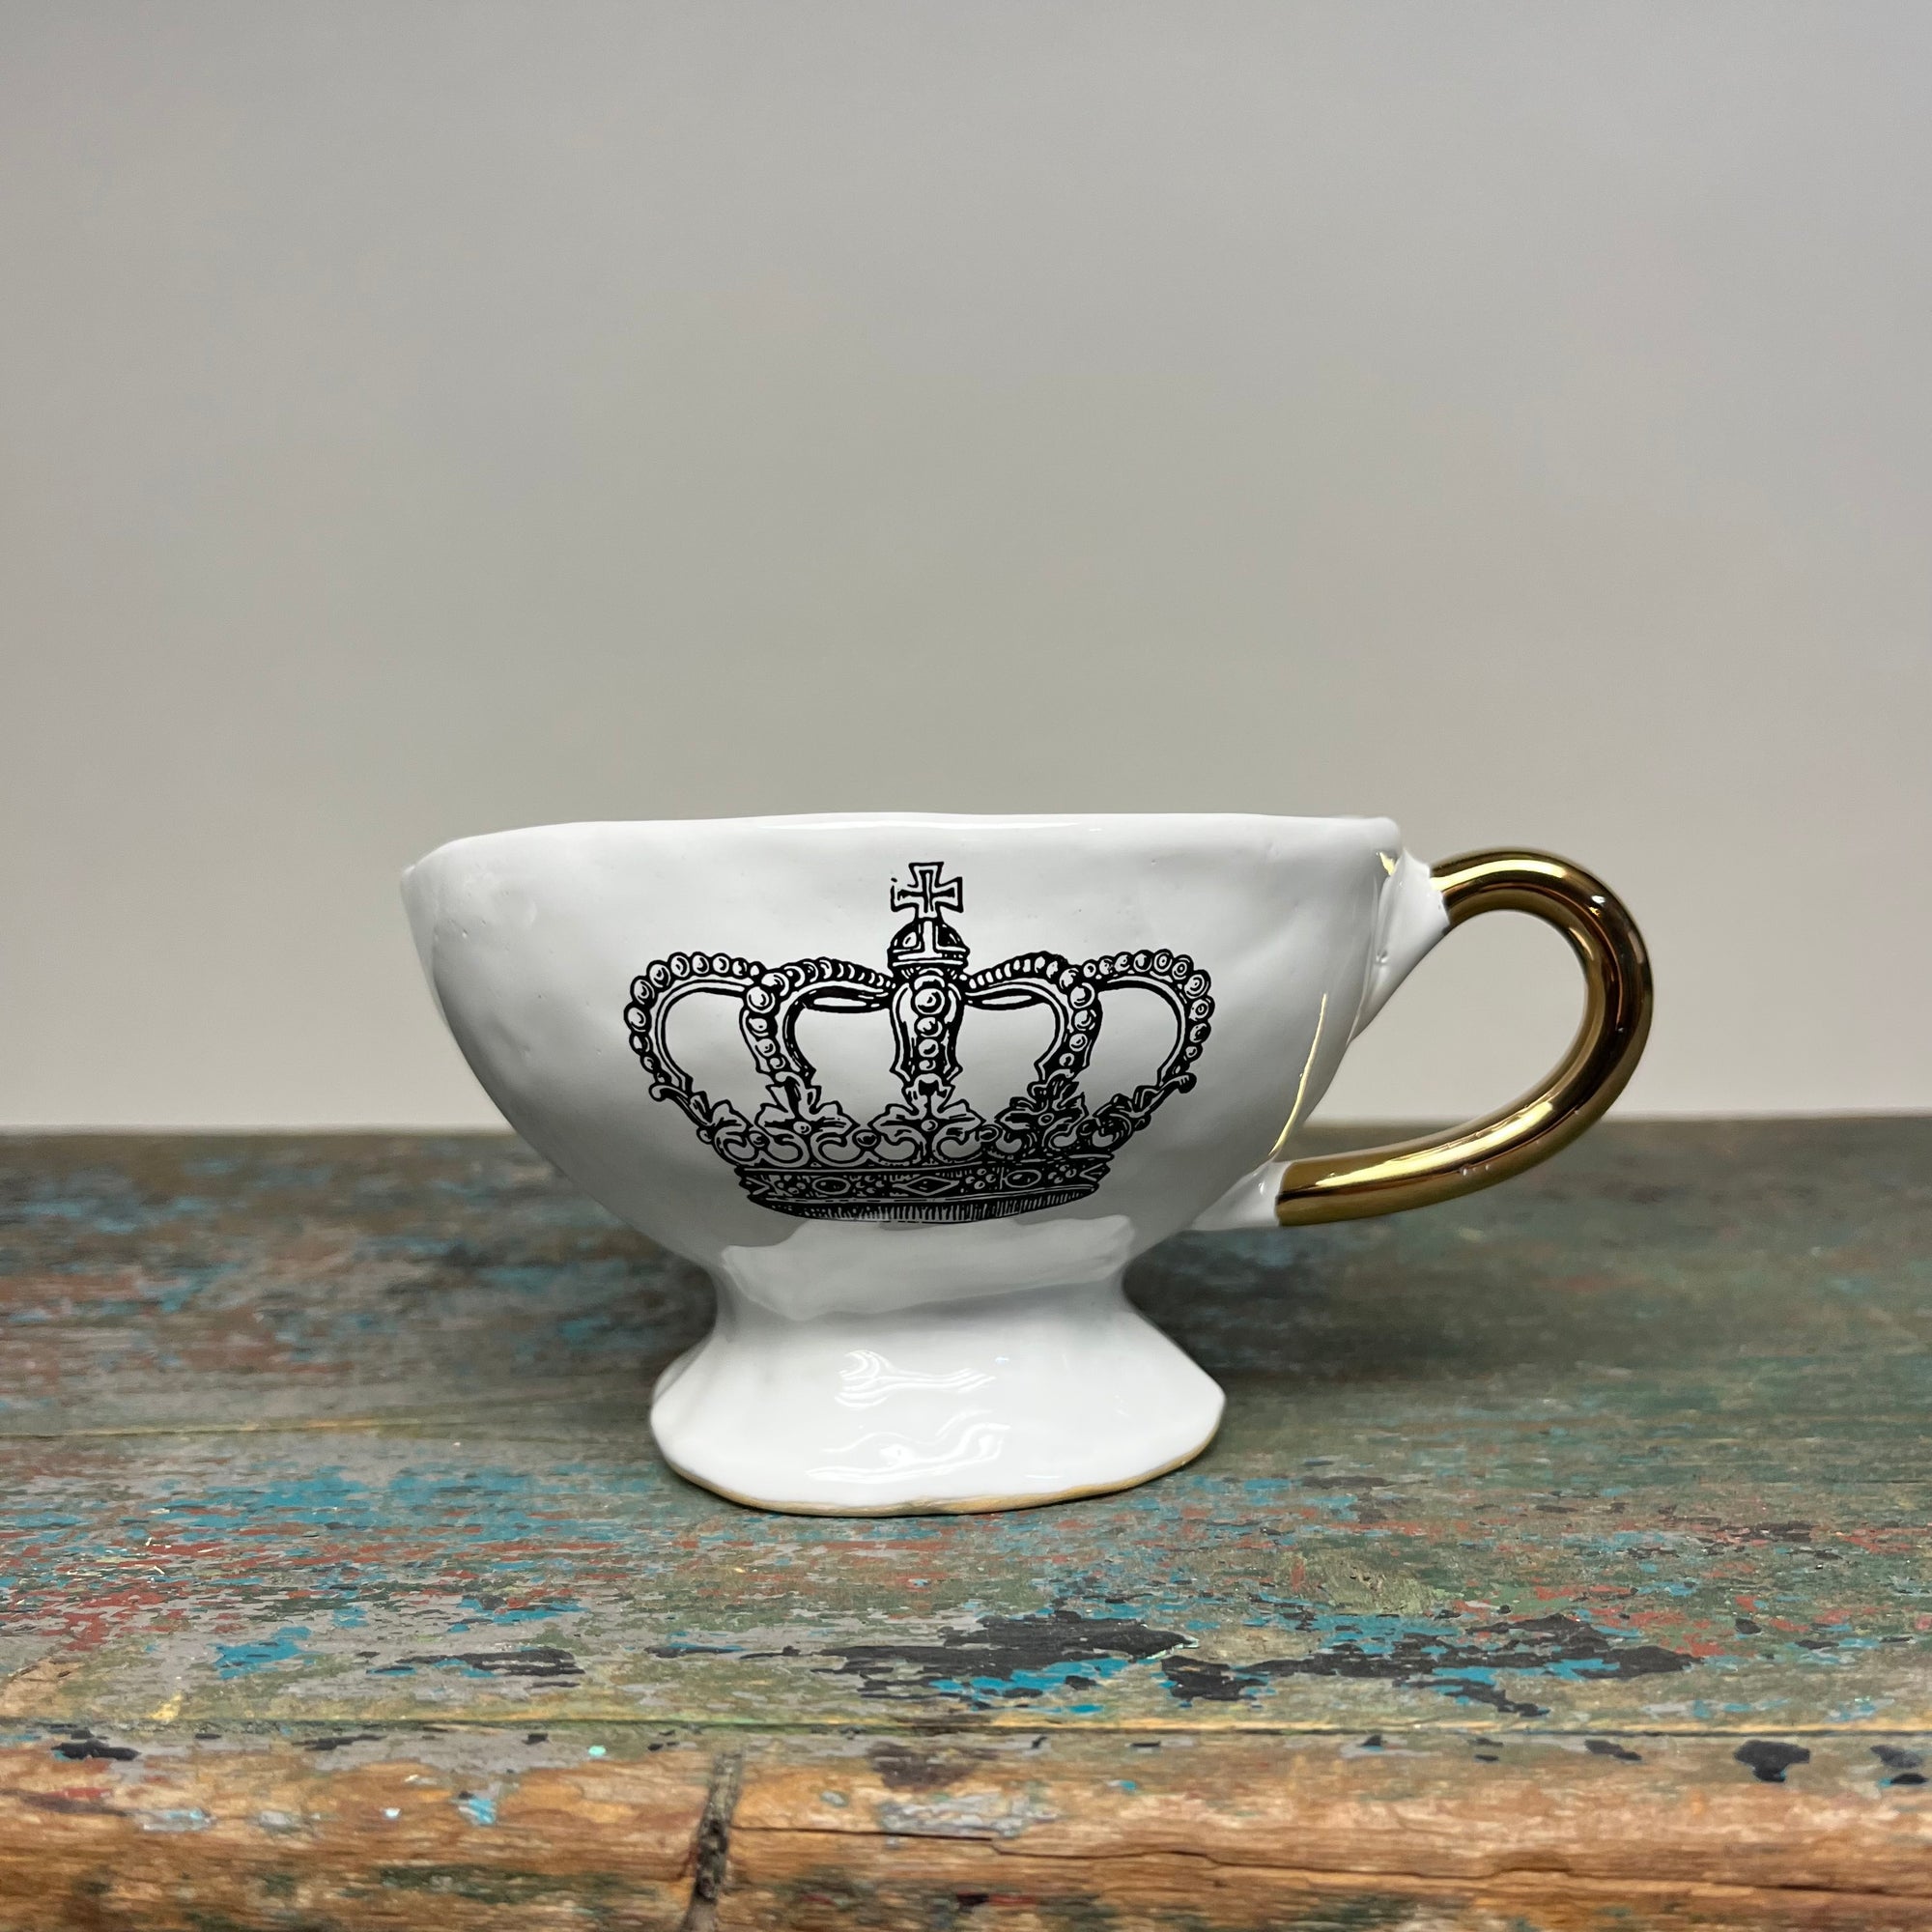 Kuhn Keramik Crown 2 'Glam" Office Cup